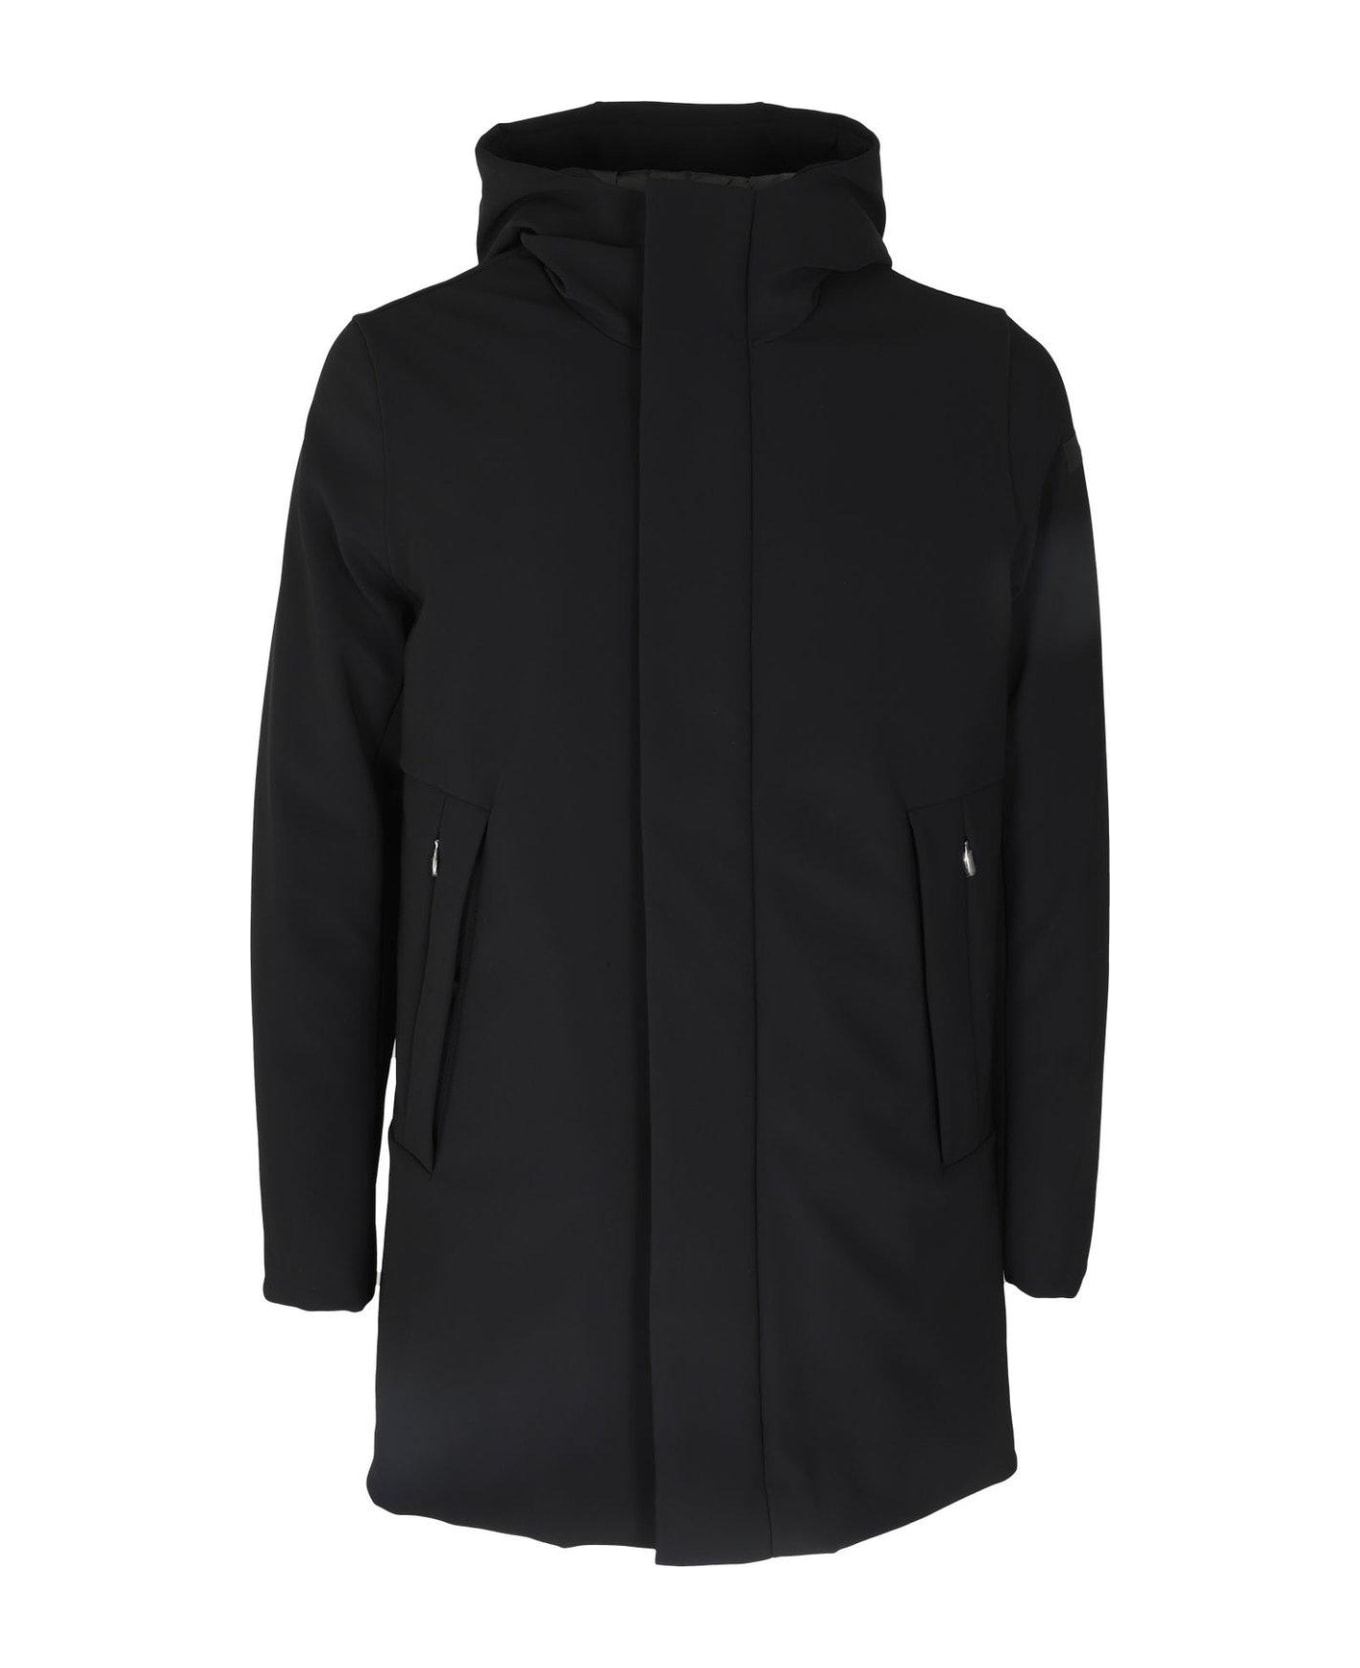 RRD - Roberto Ricci Design Long-sleeved Hooded Parka - Black コート